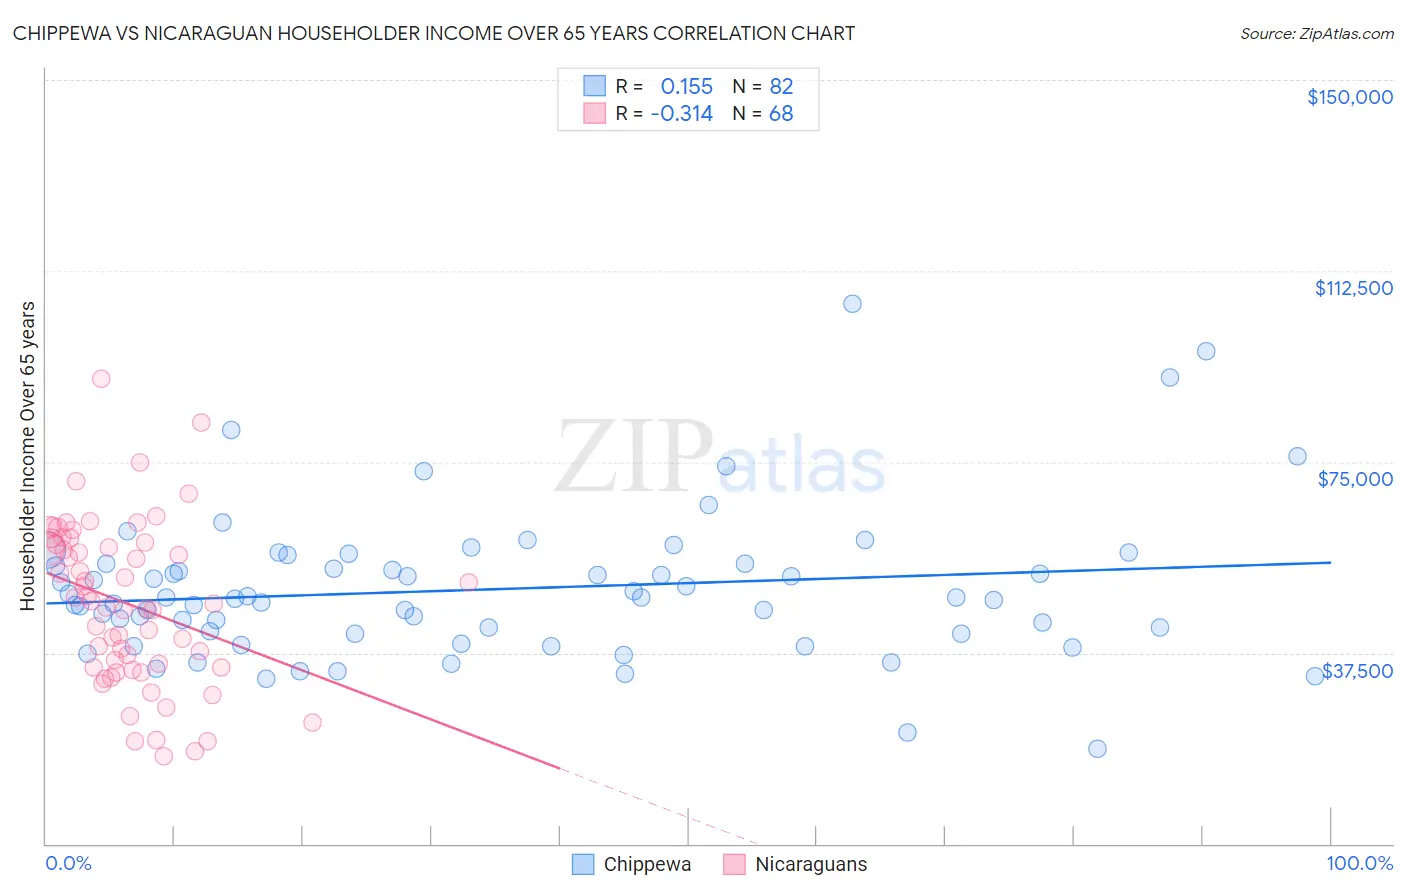 Chippewa vs Nicaraguan Householder Income Over 65 years